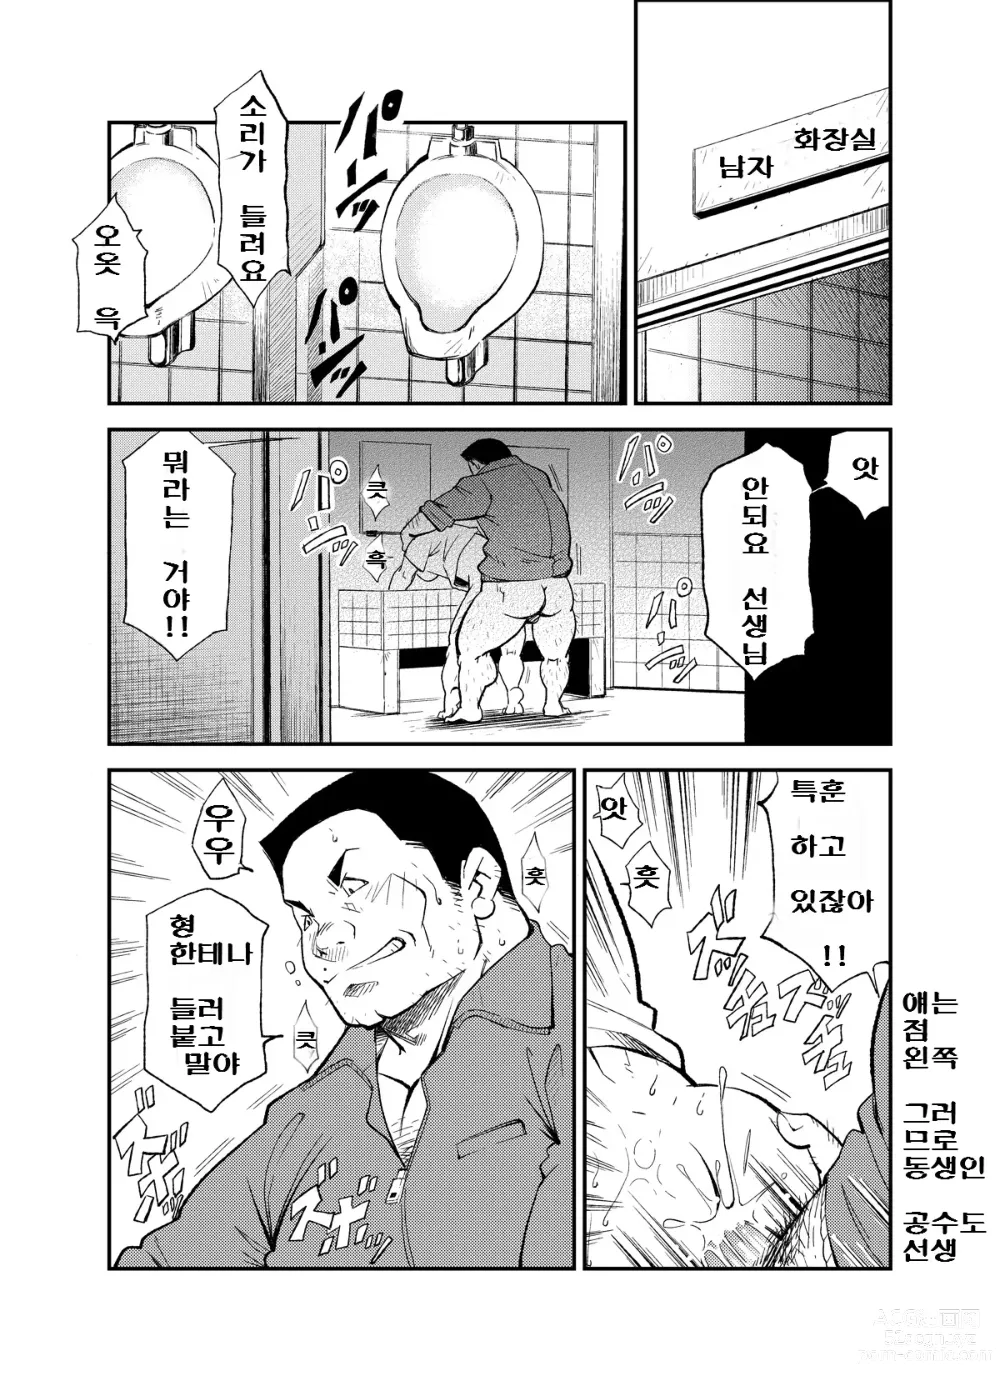 Page 22 of doujinshi 올바른 남자의 교육법 3 쌍둥이